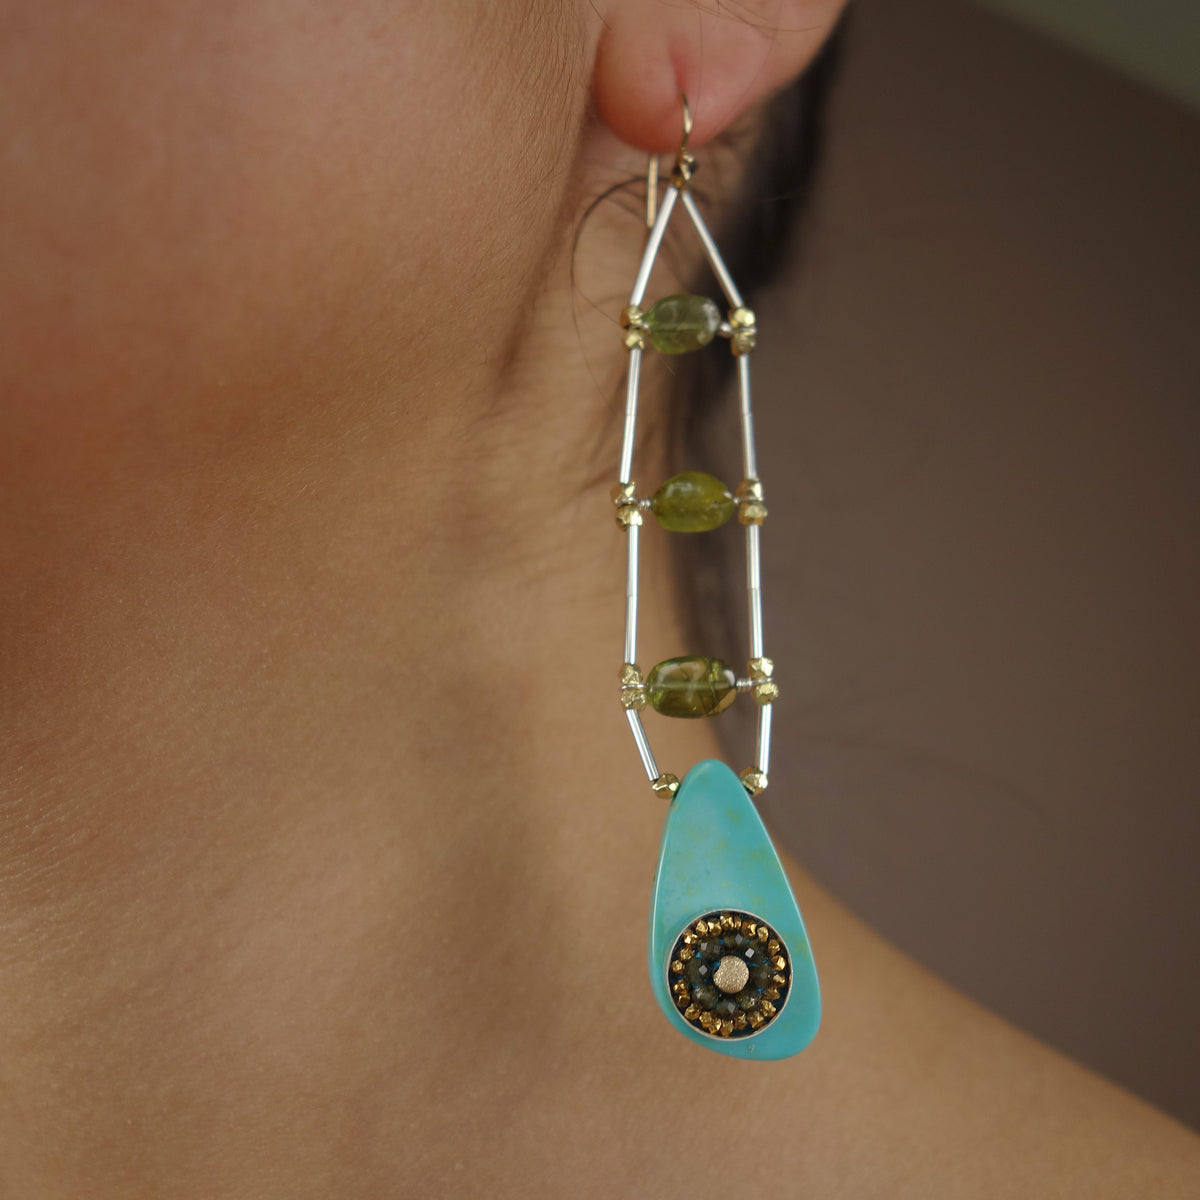 Her Inner Eye: sapphire, turquoise, and peridot earring